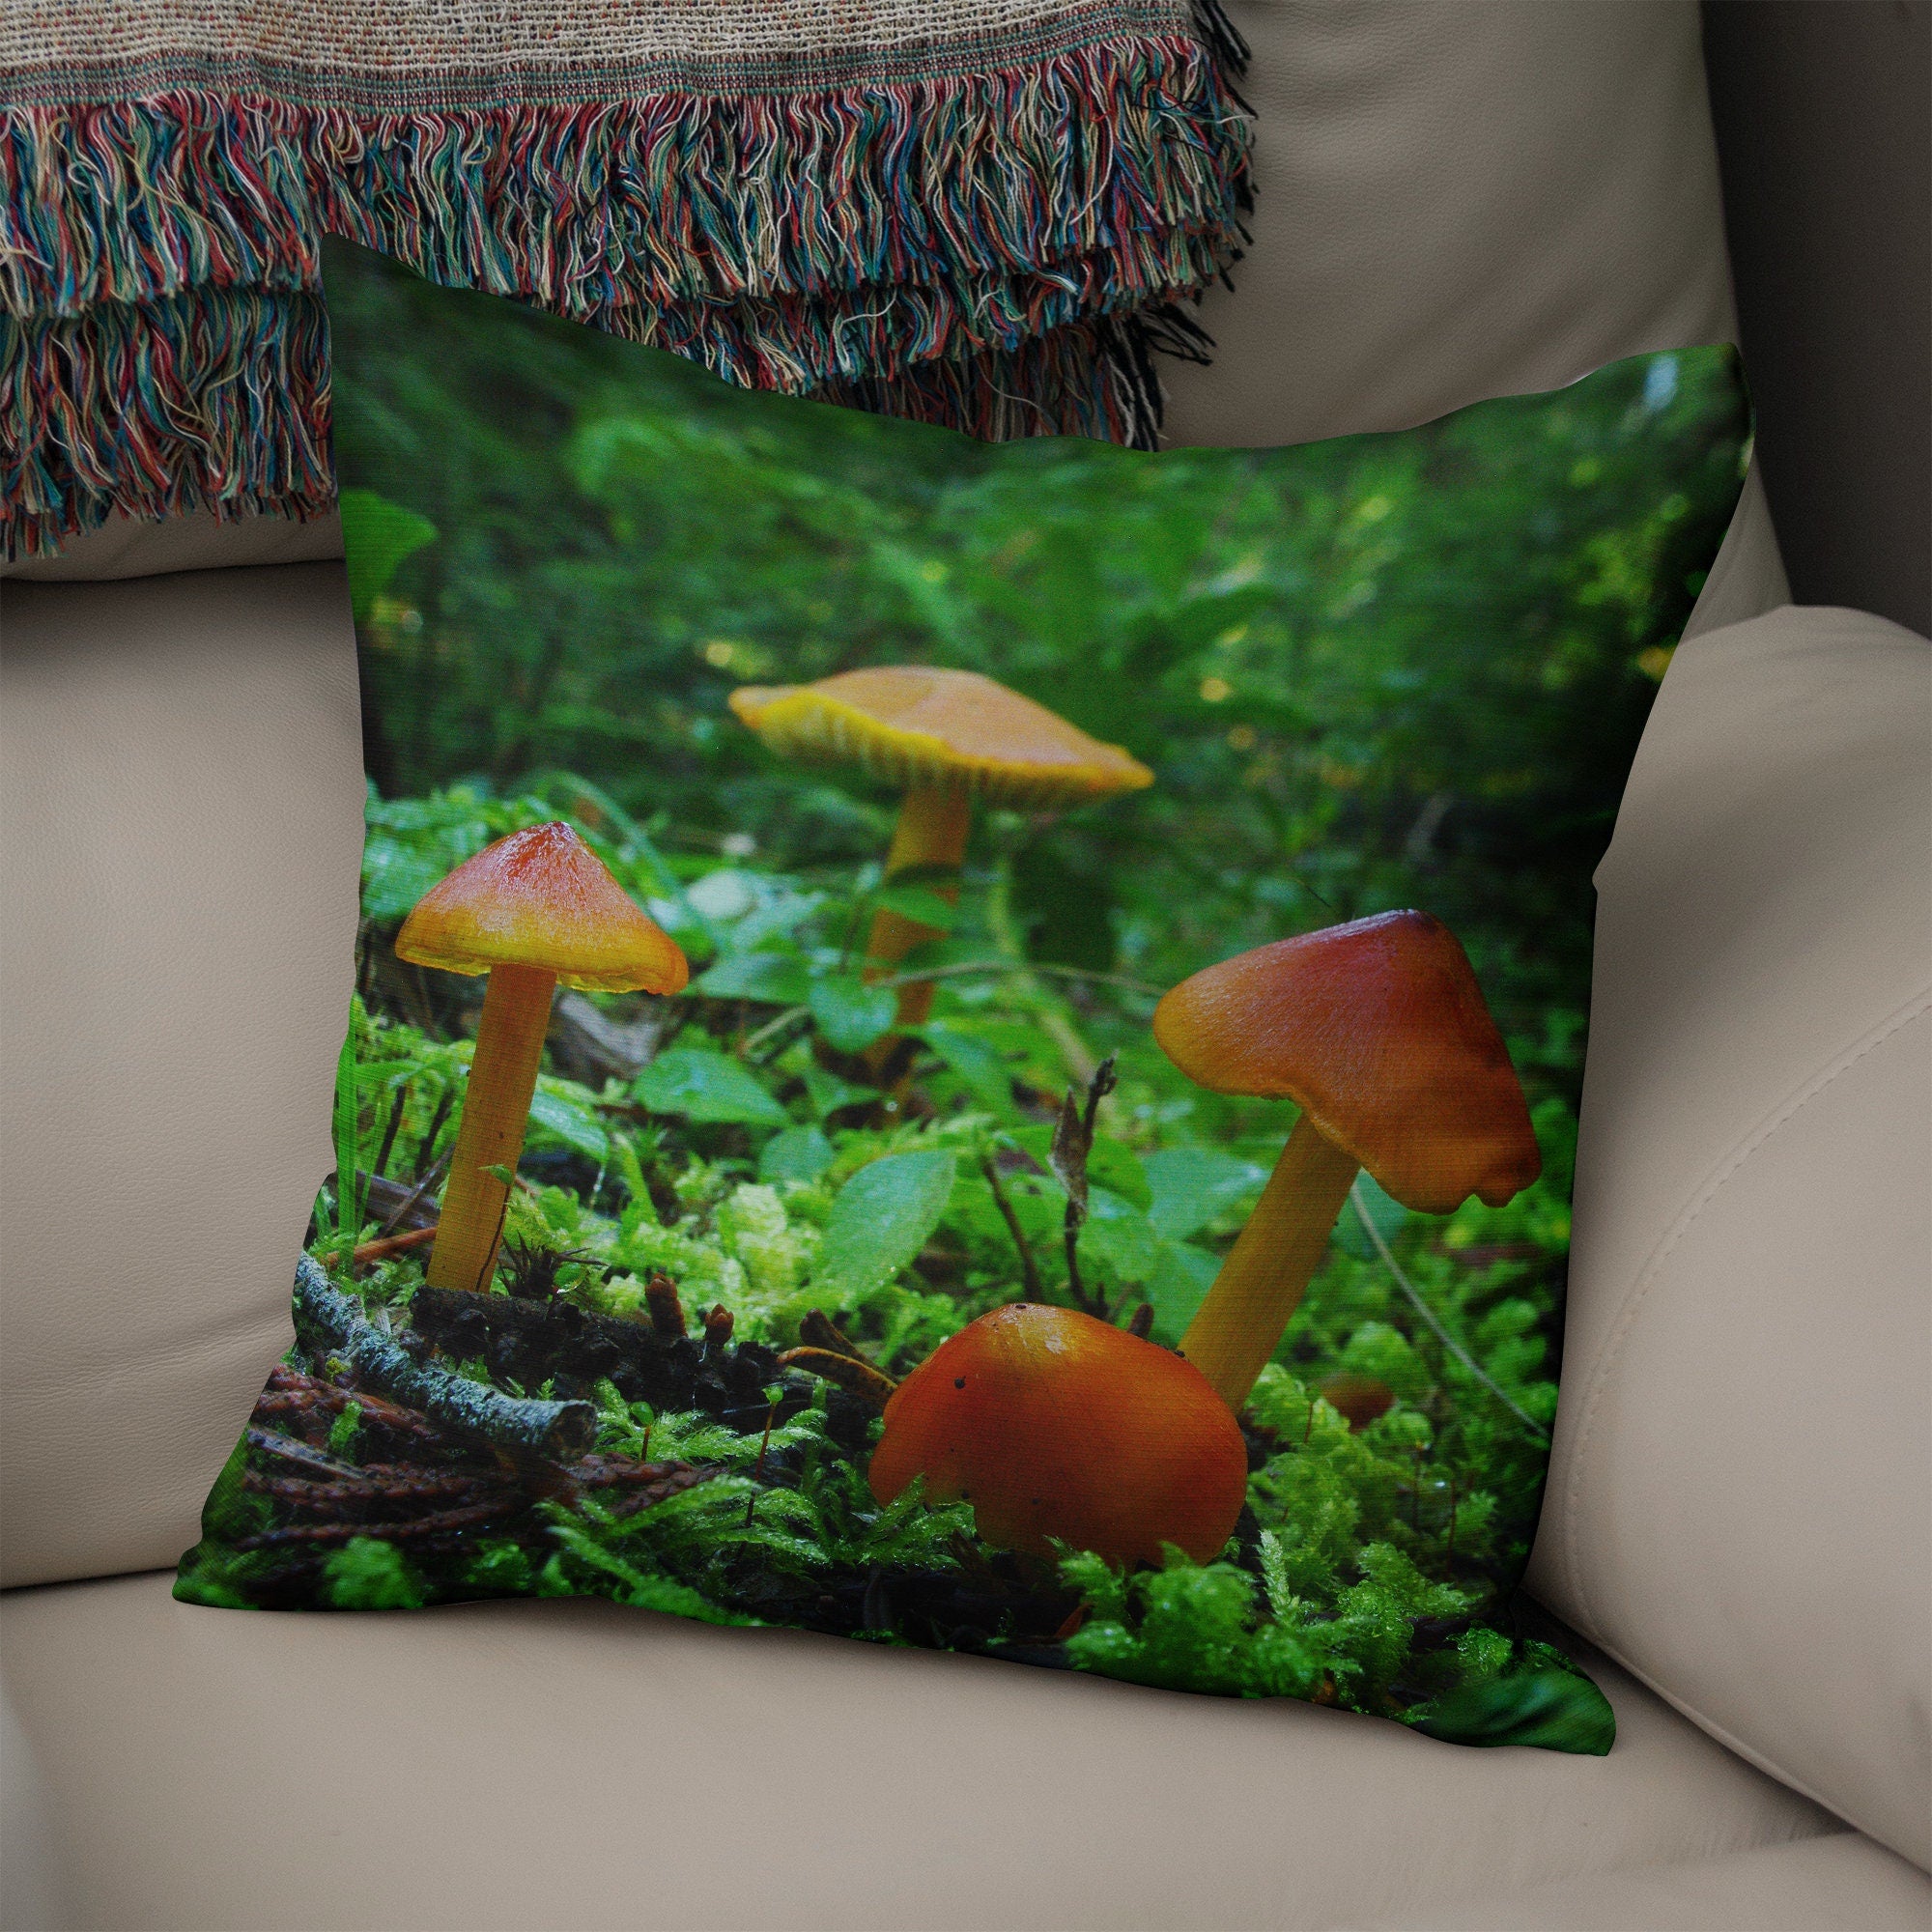 Little Mushrooms Throw Pillow Cover Pacific Northwest Cedar